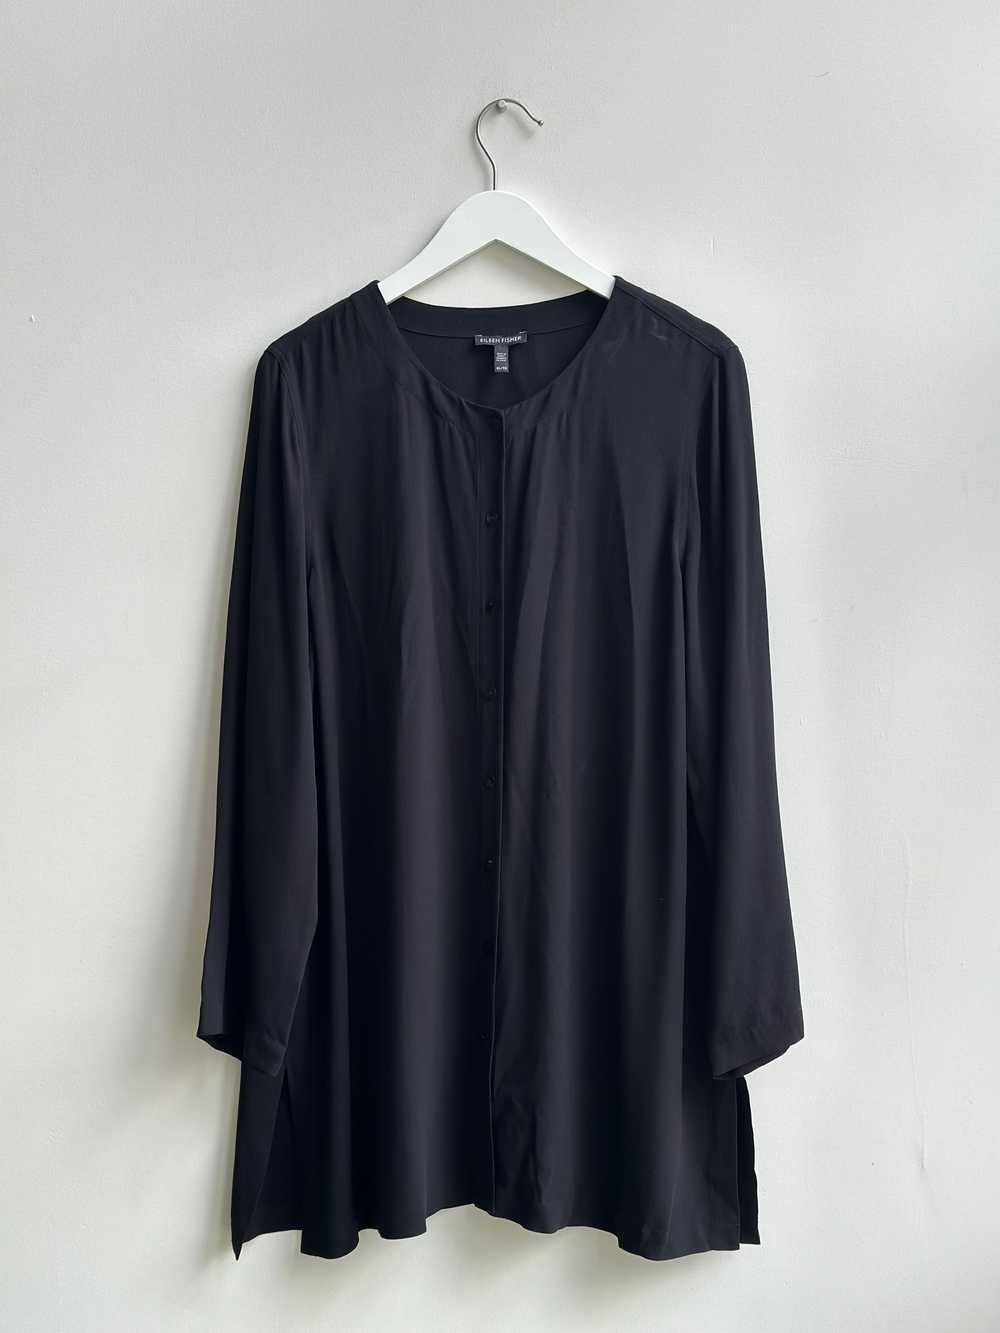 Eileen Fisher Oversized Black Silk Top Size XL - image 1